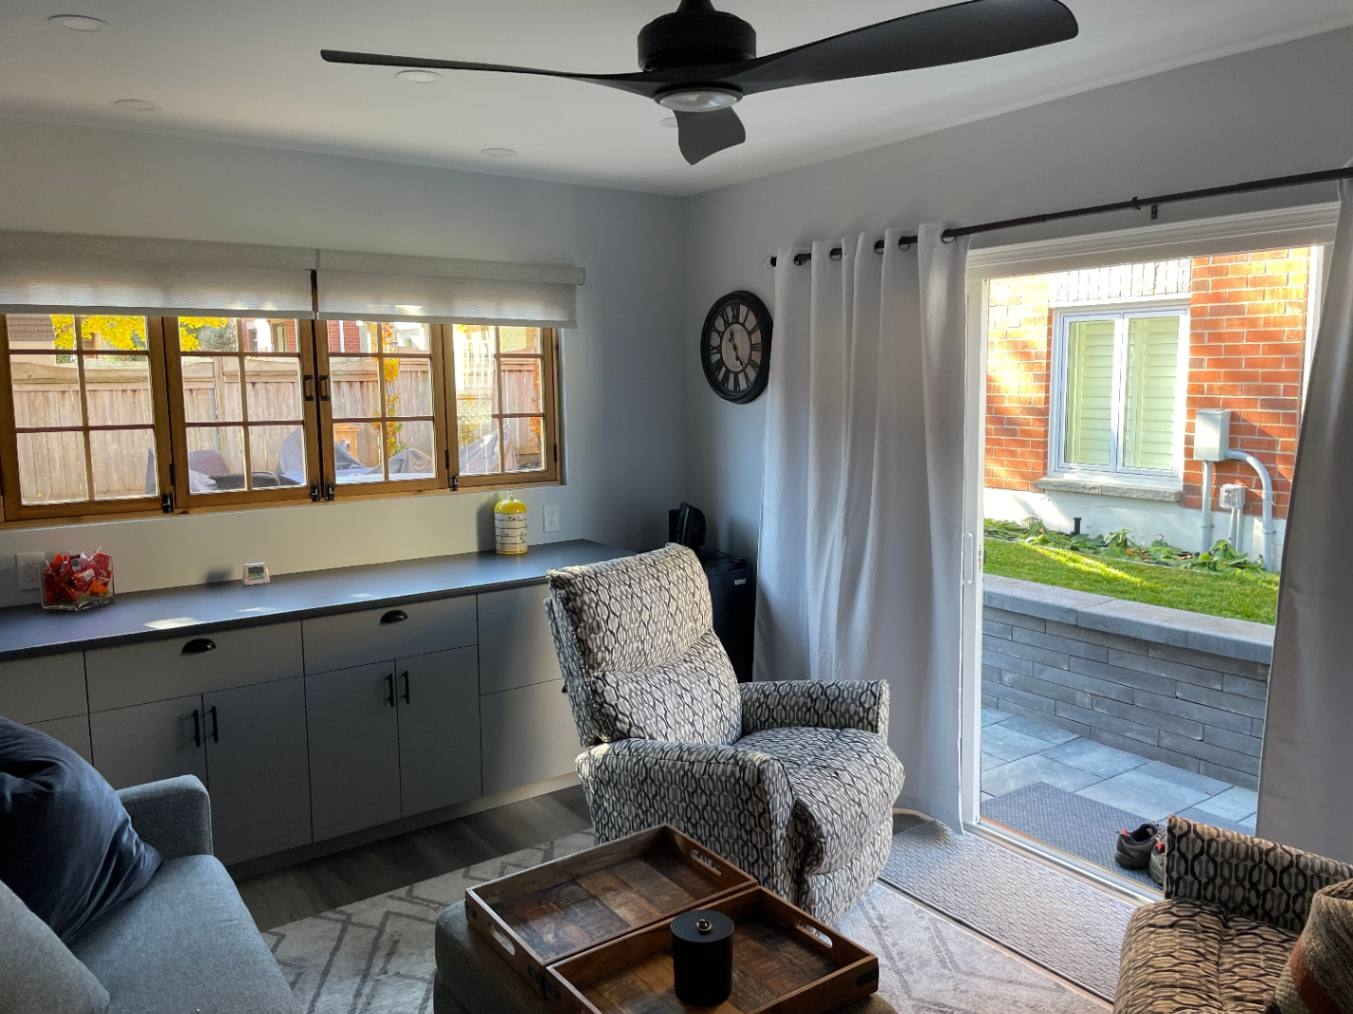 Interior view of 12’x16' Sonoma Home Studio located in New Haven, Conneticut